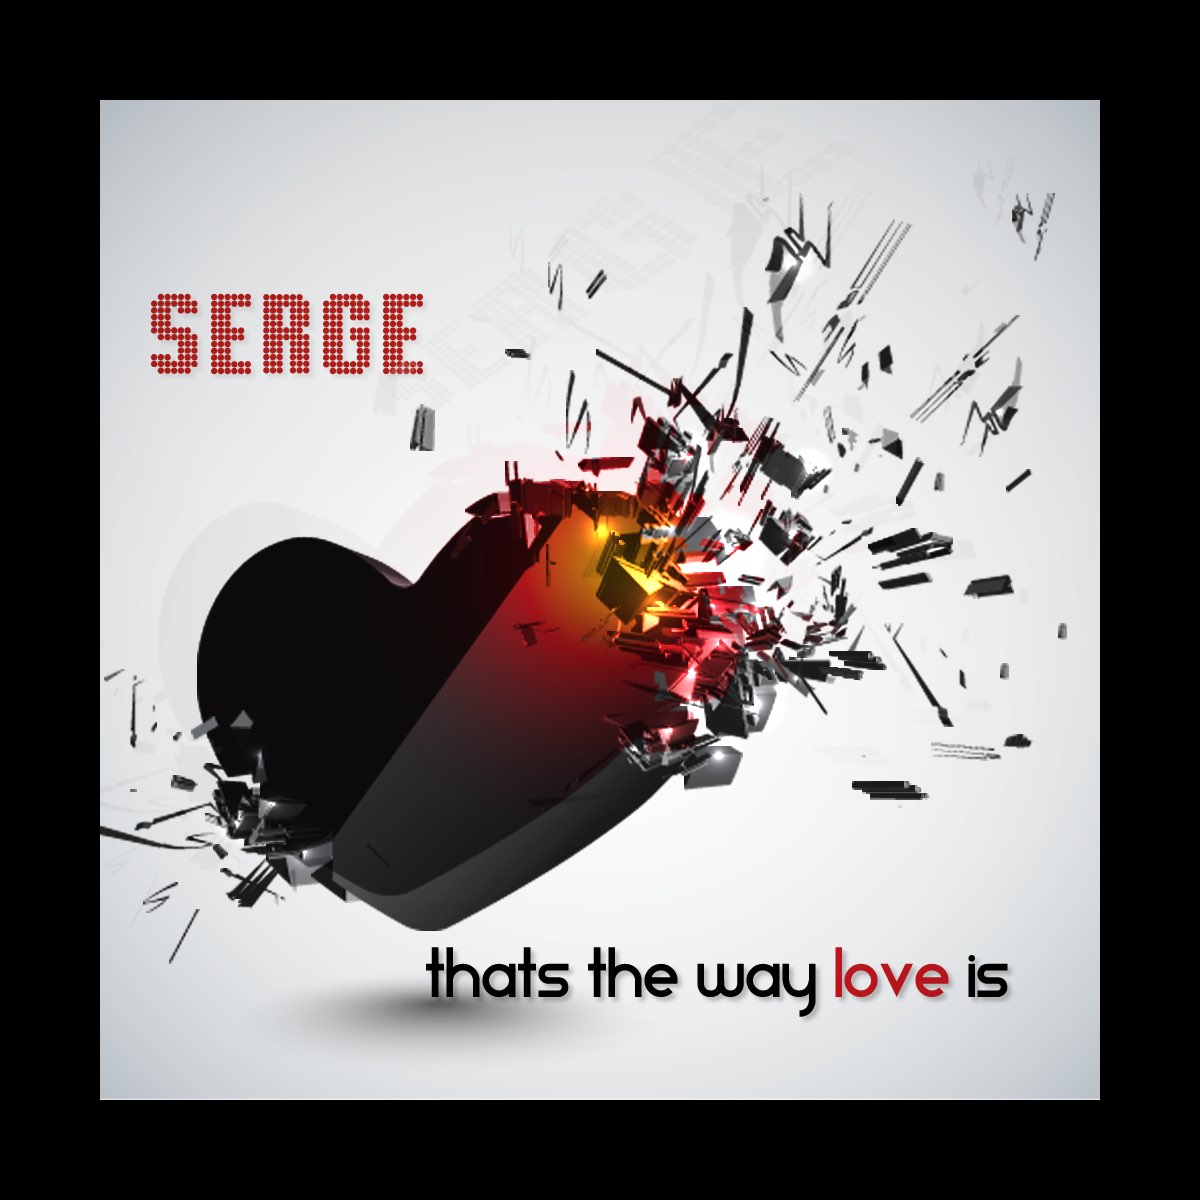 Serge песня. Музыка Серж. A way to Love. Thats the Music. Way s of love